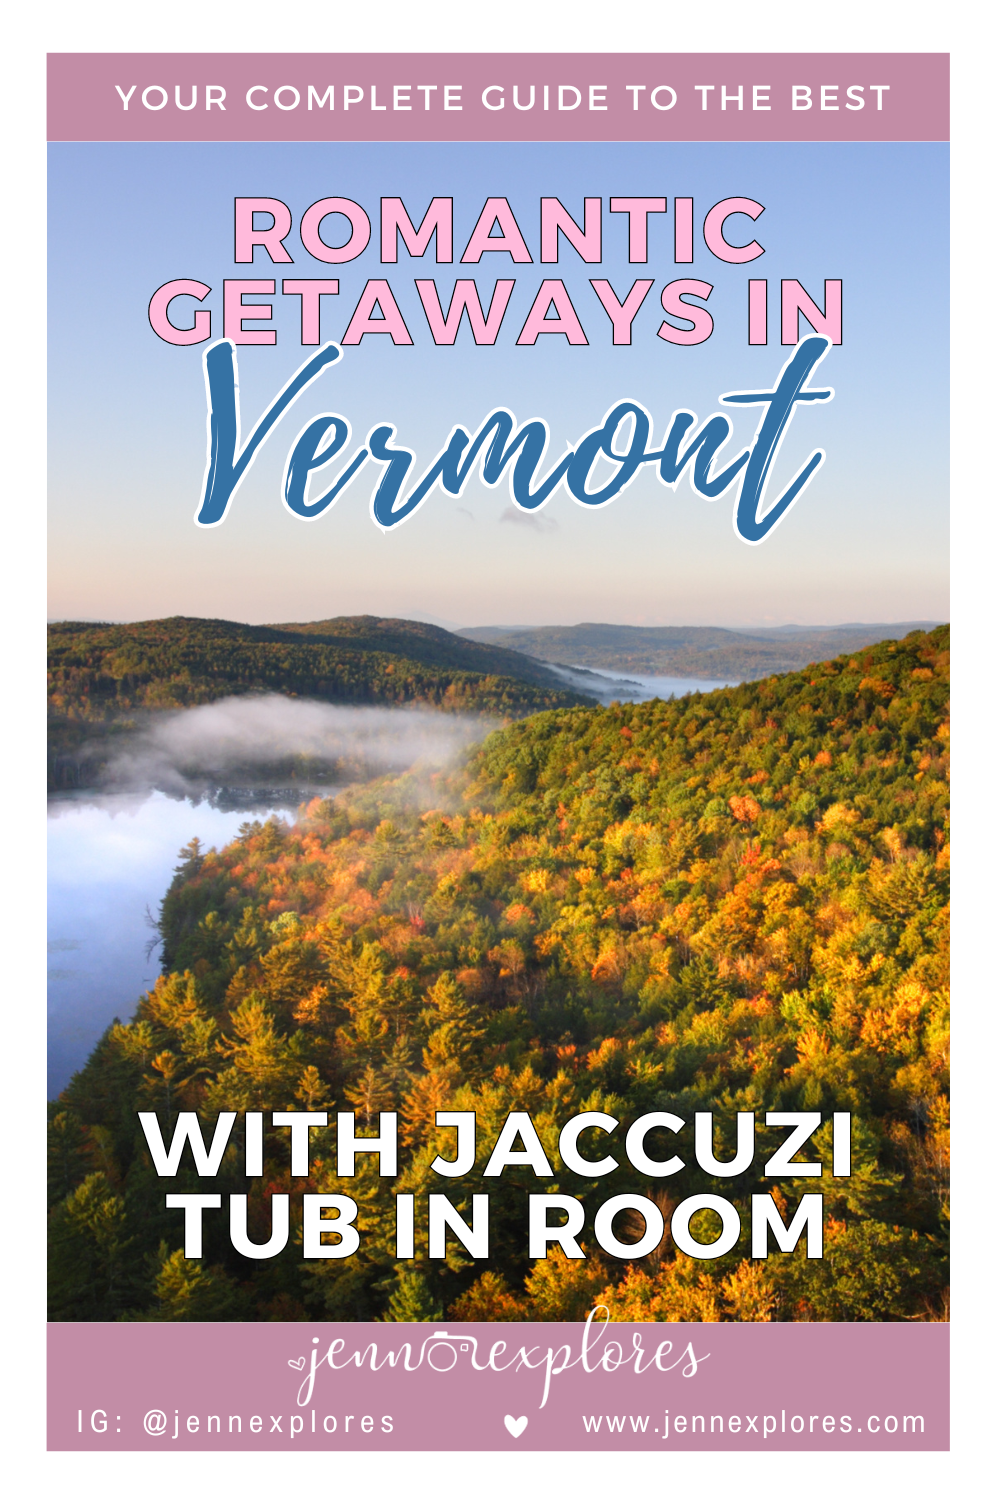 romantic getaways in vermont with jacuzzi in-room